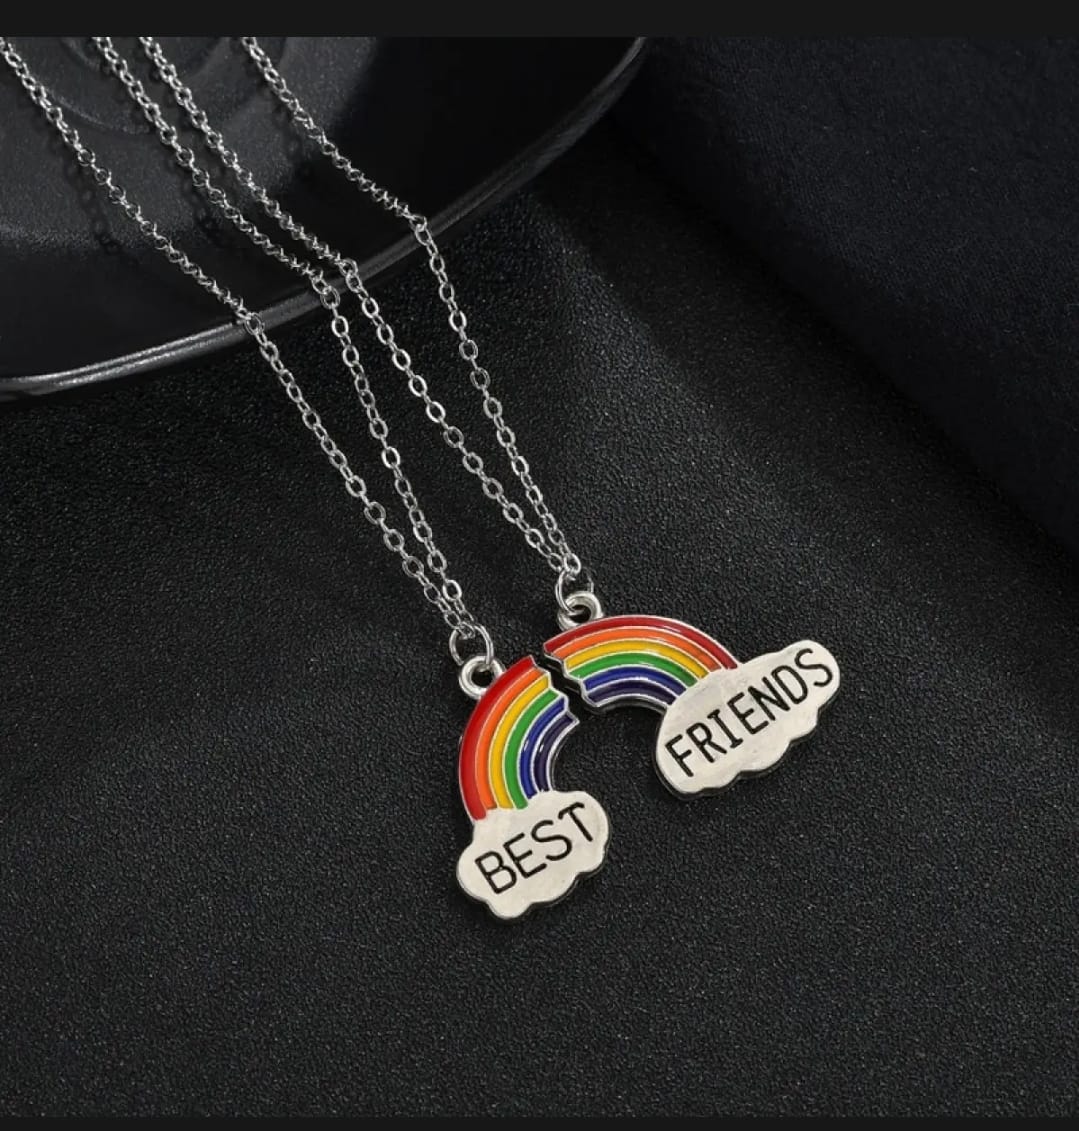 Rainbow ( Best Friend ) - Necklace Set of 2